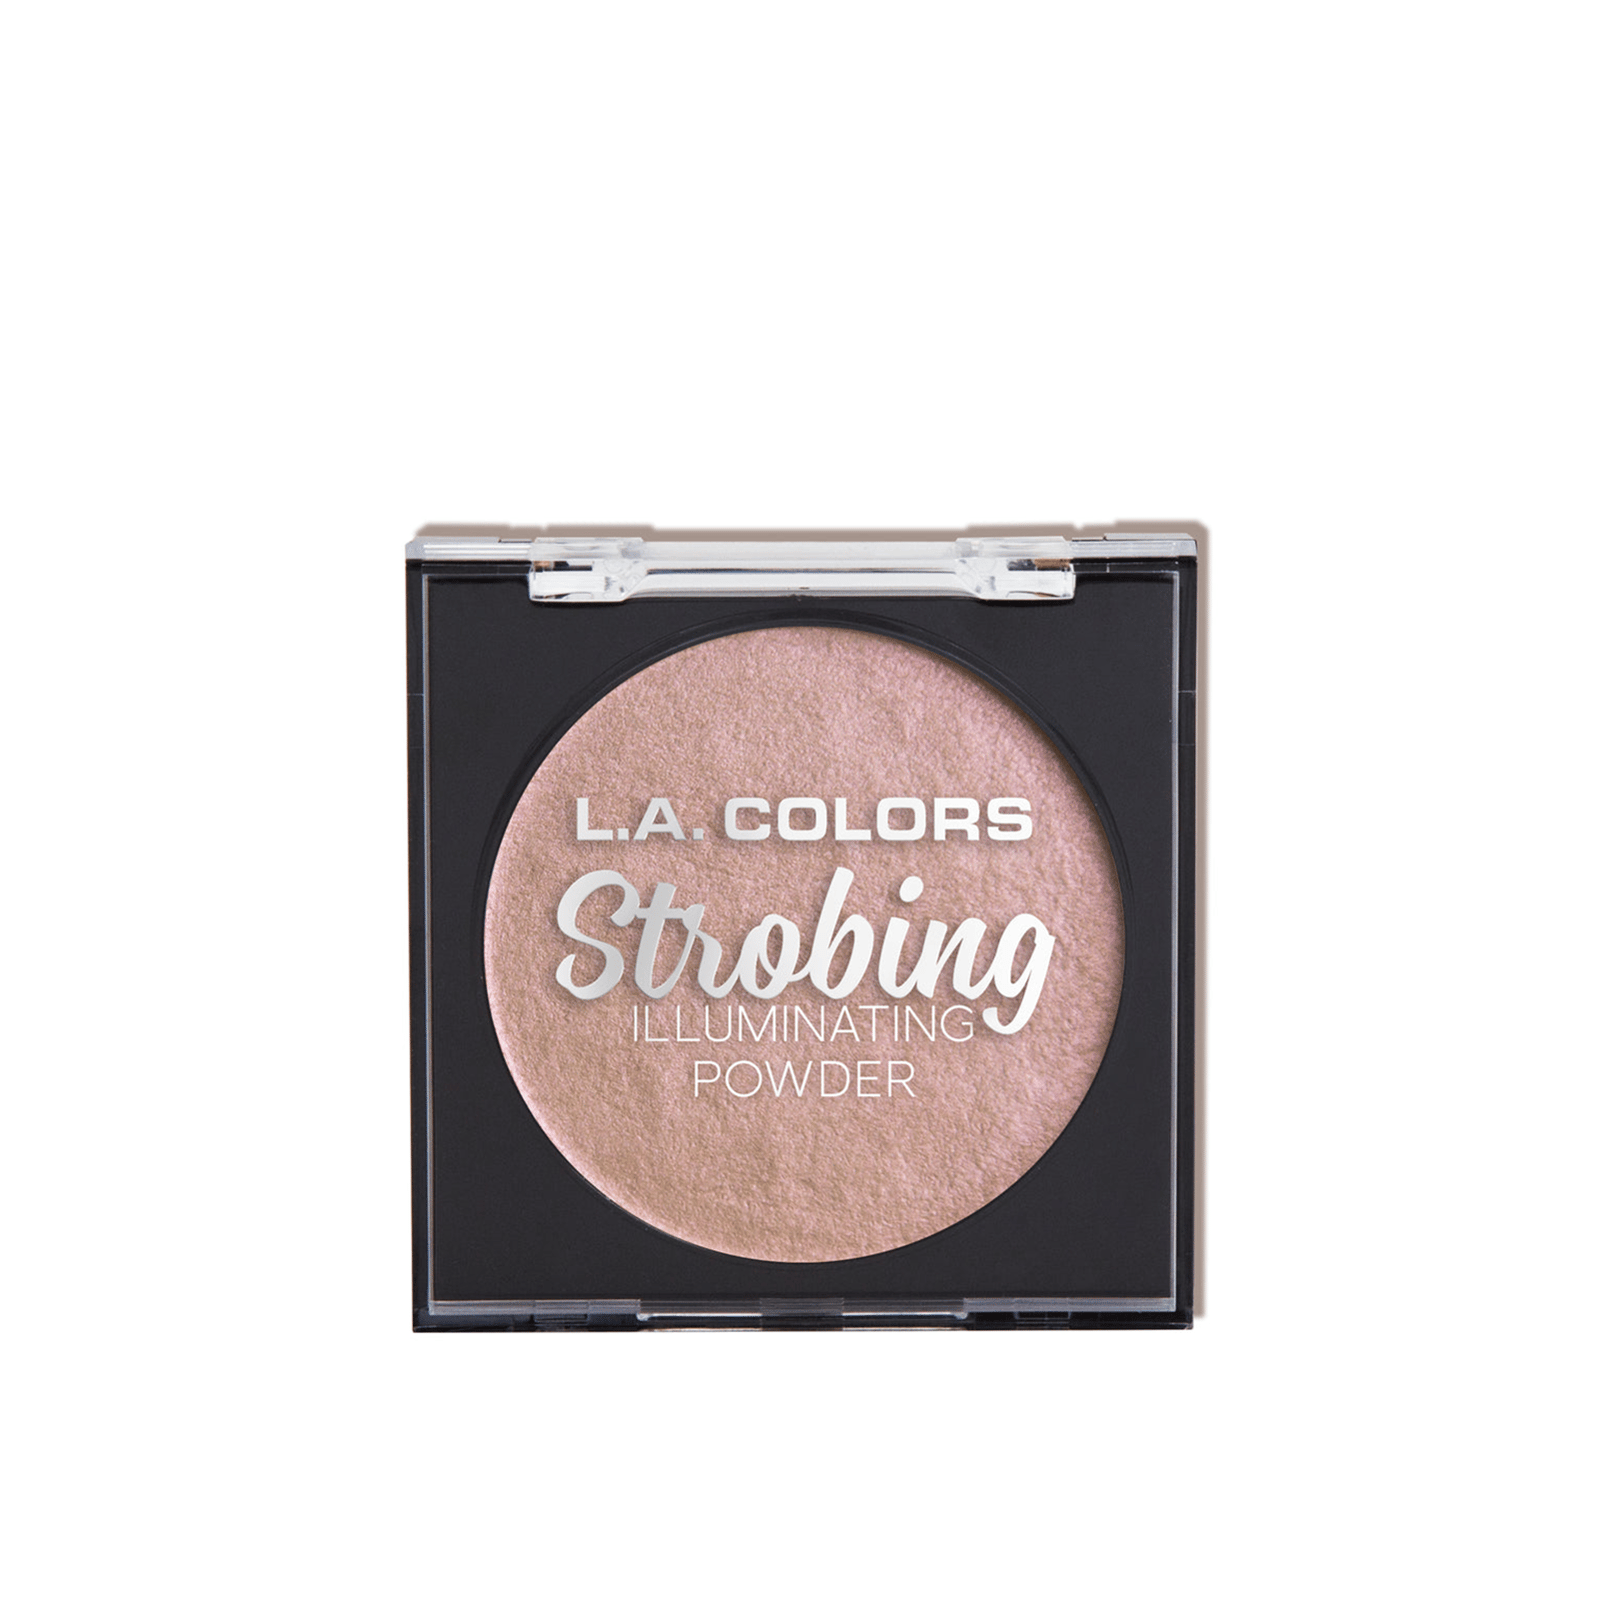 L.A. Colors Strobing Illuminating Powder CSP254 Flashing Pink 6.5g (0.23 oz)